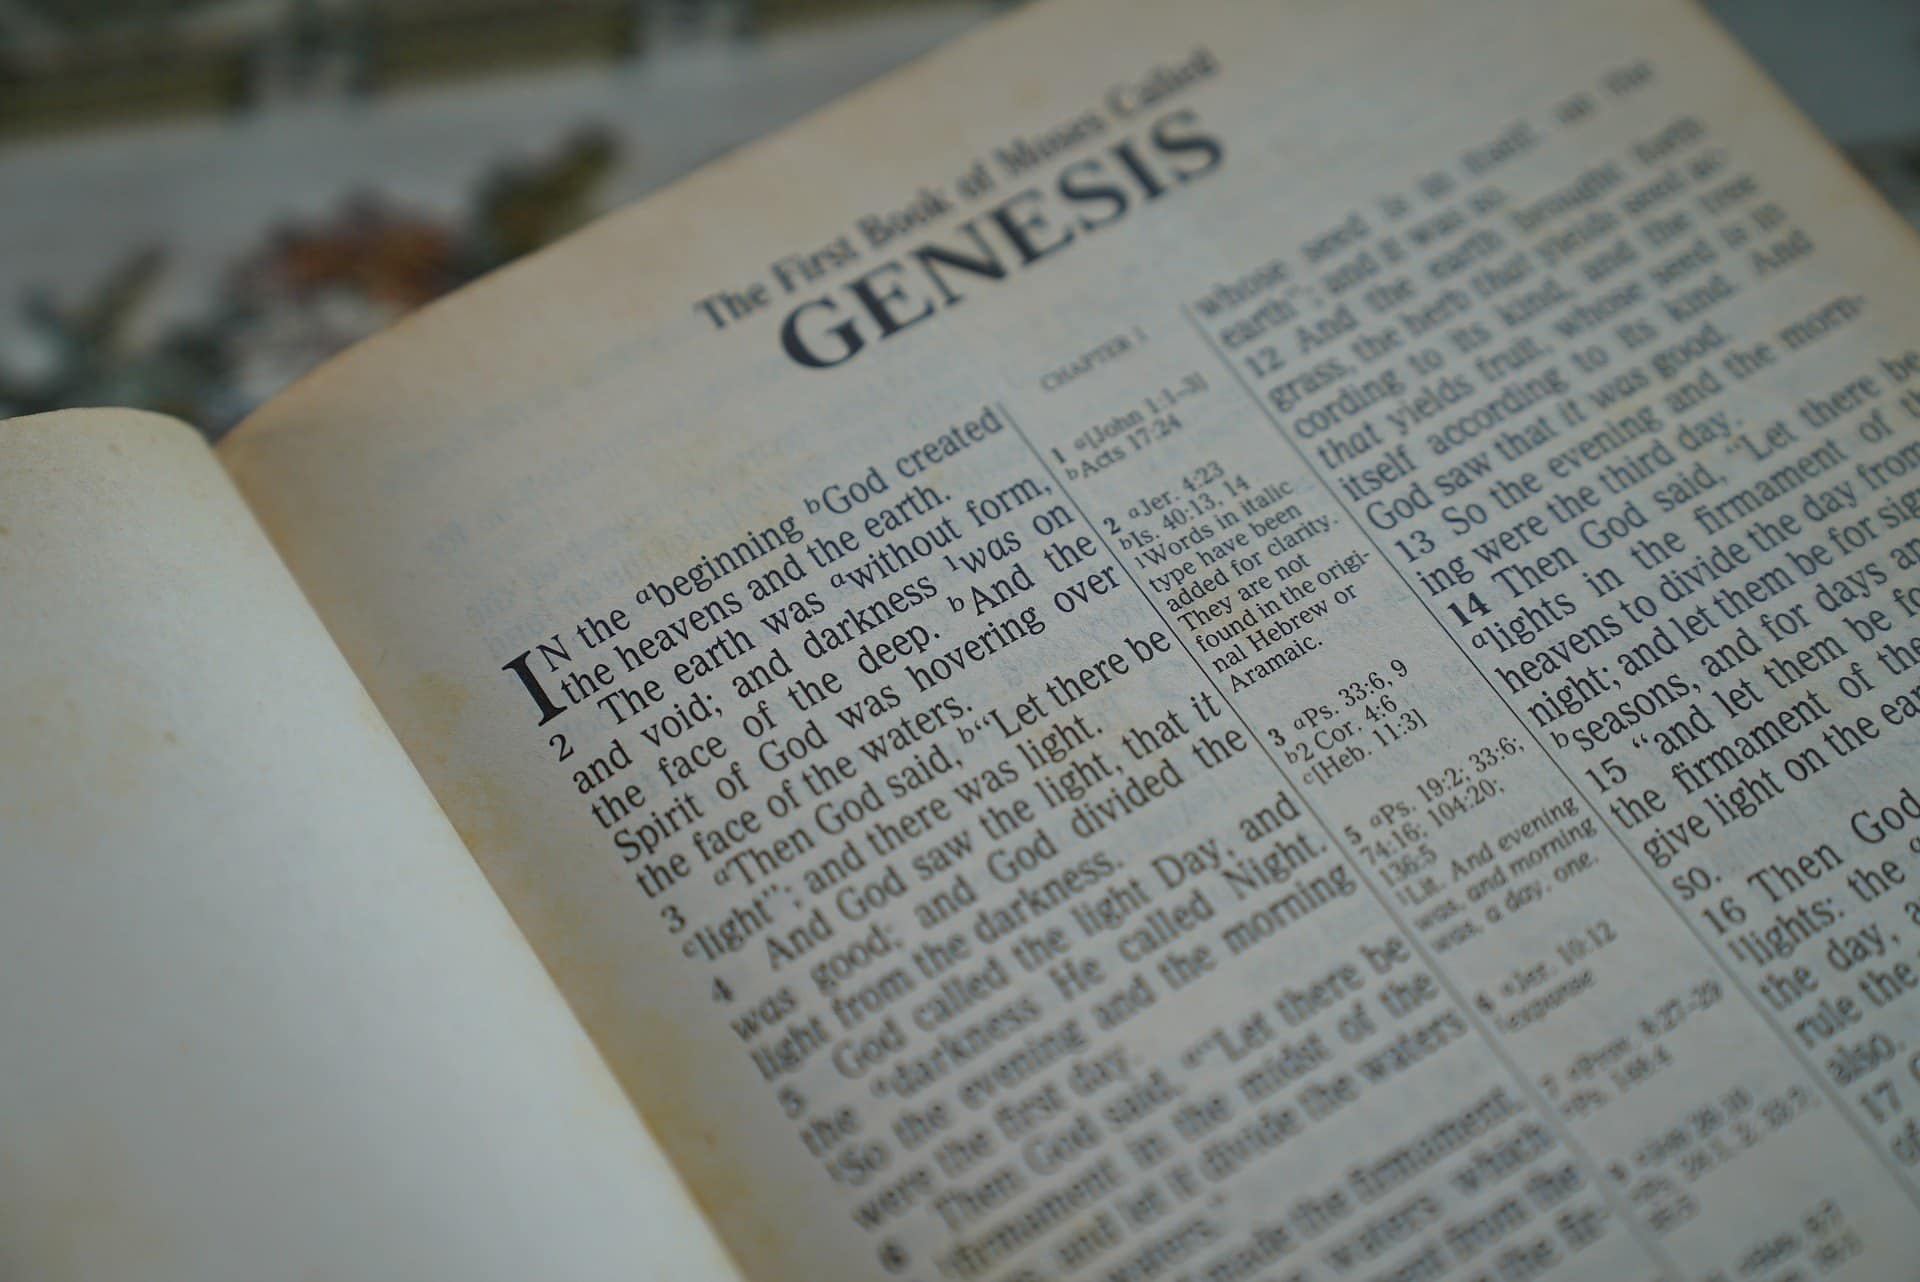 In the beginning was the Word - Genesis